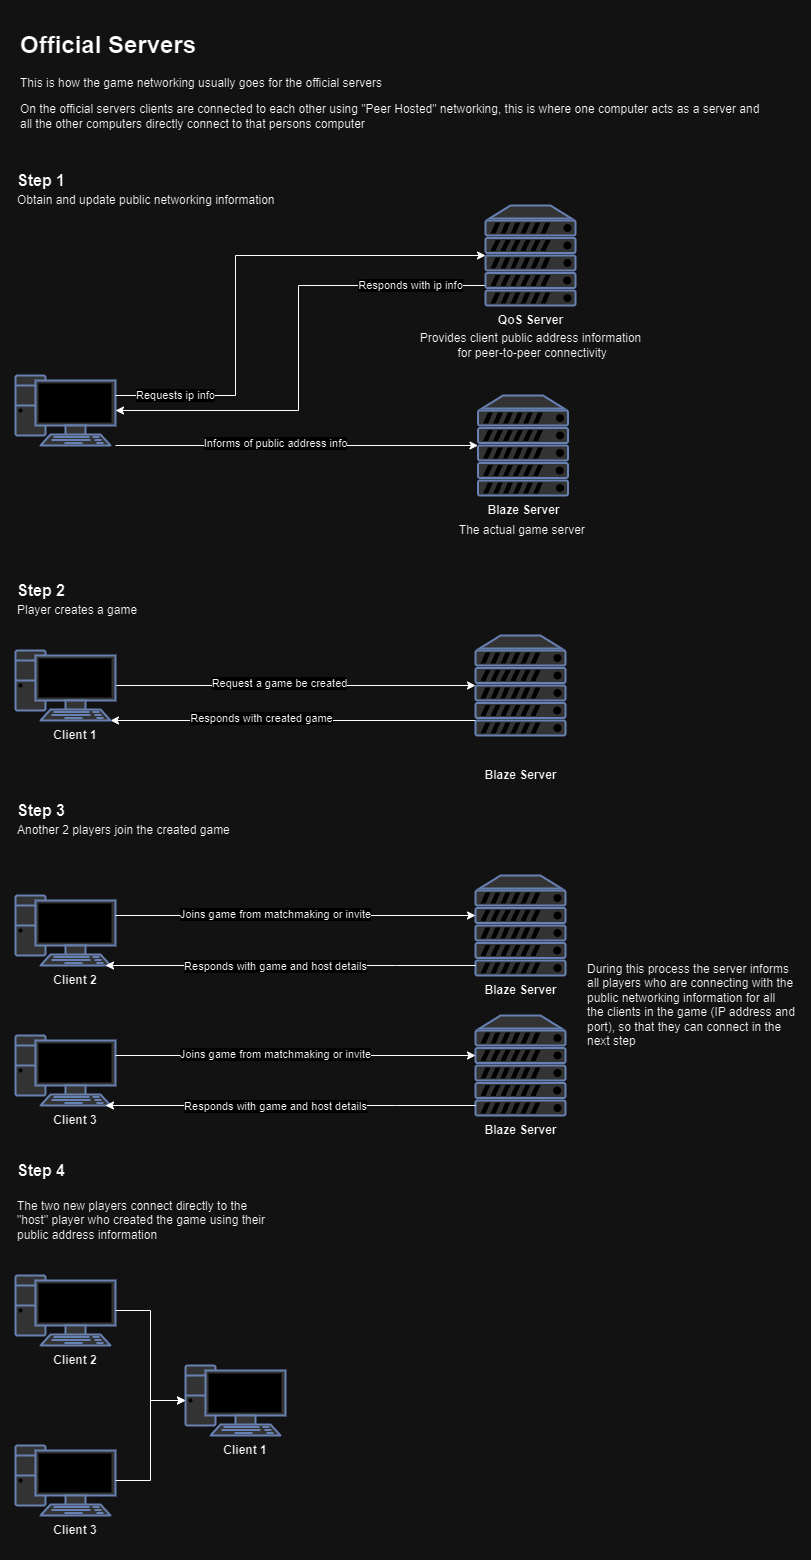 Official Servers Diagram